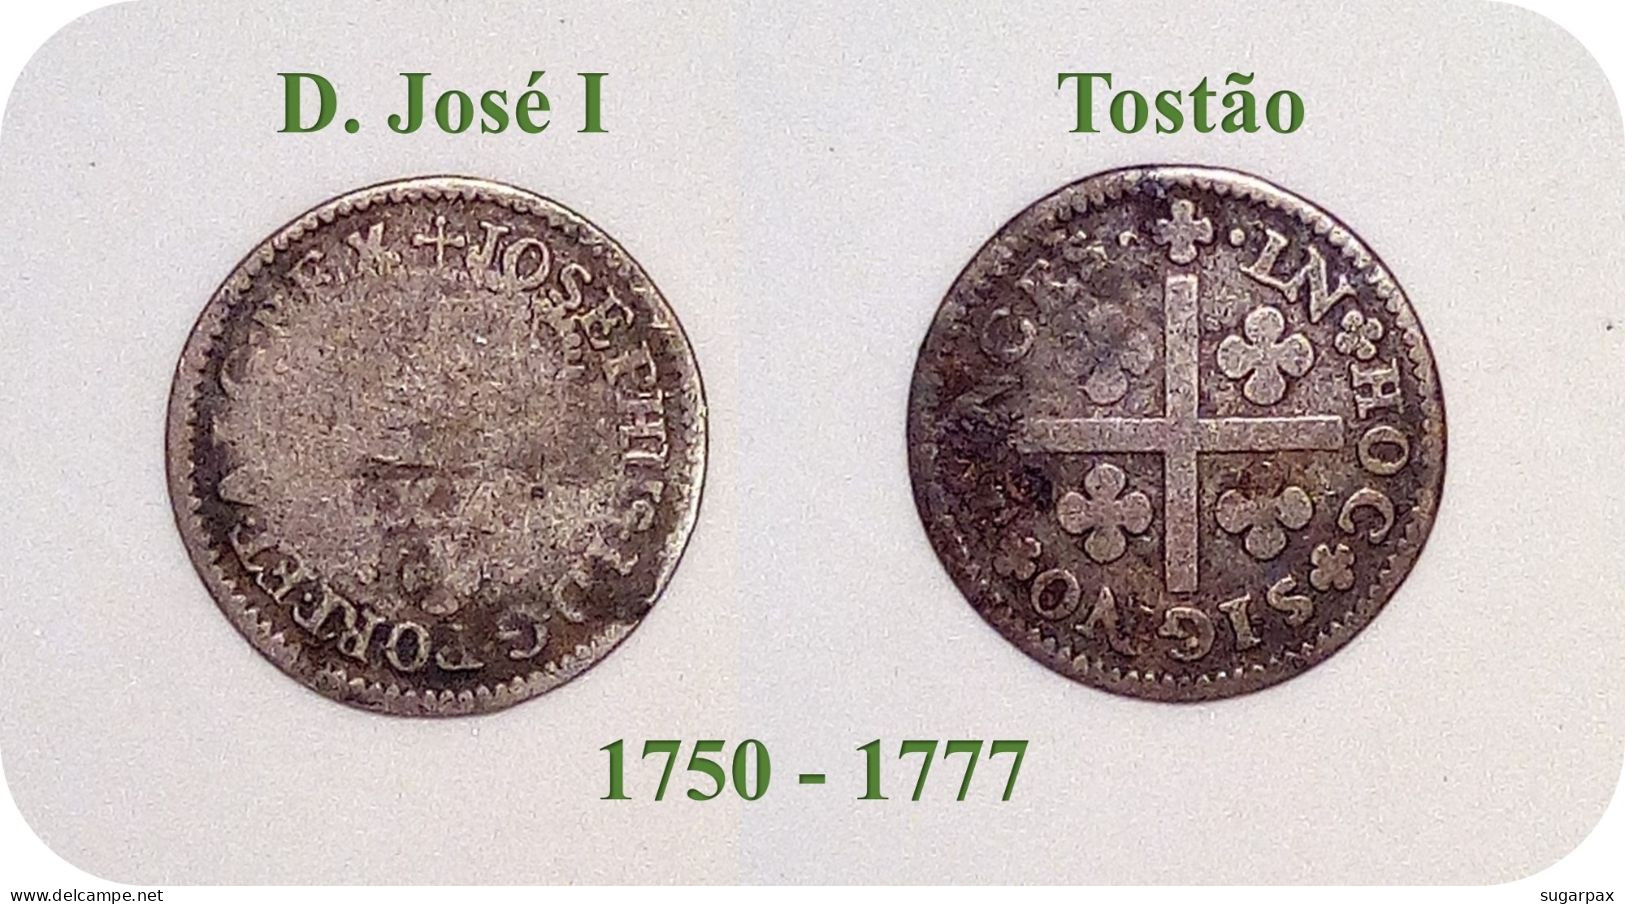 D. José I - Tostão - N/D ( 1750 - 1777 ) - KM # 238.1 - SILVER ( Ag 916,6 ) - A.G. 19.01 - Monarquia Portugal - Portugal